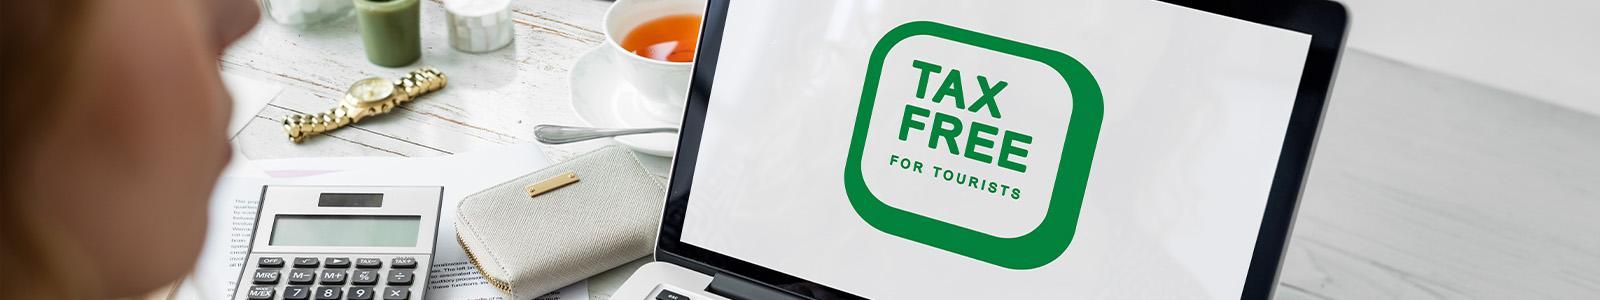 Tax Free zwrot podatku VAT